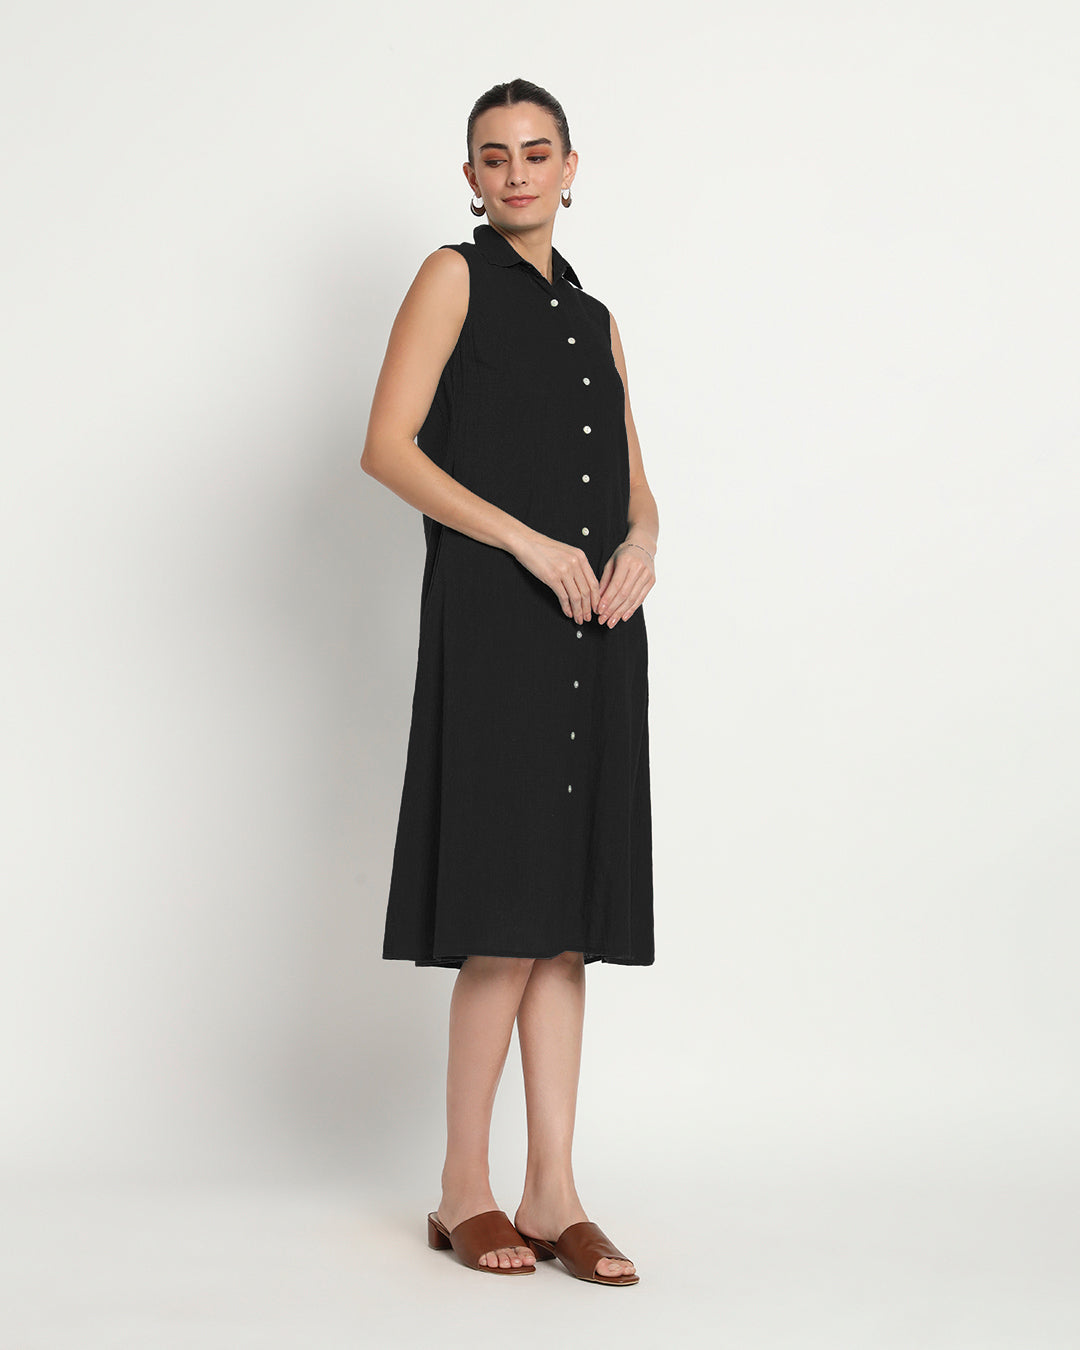 Classic Black Artful A-Line Dress